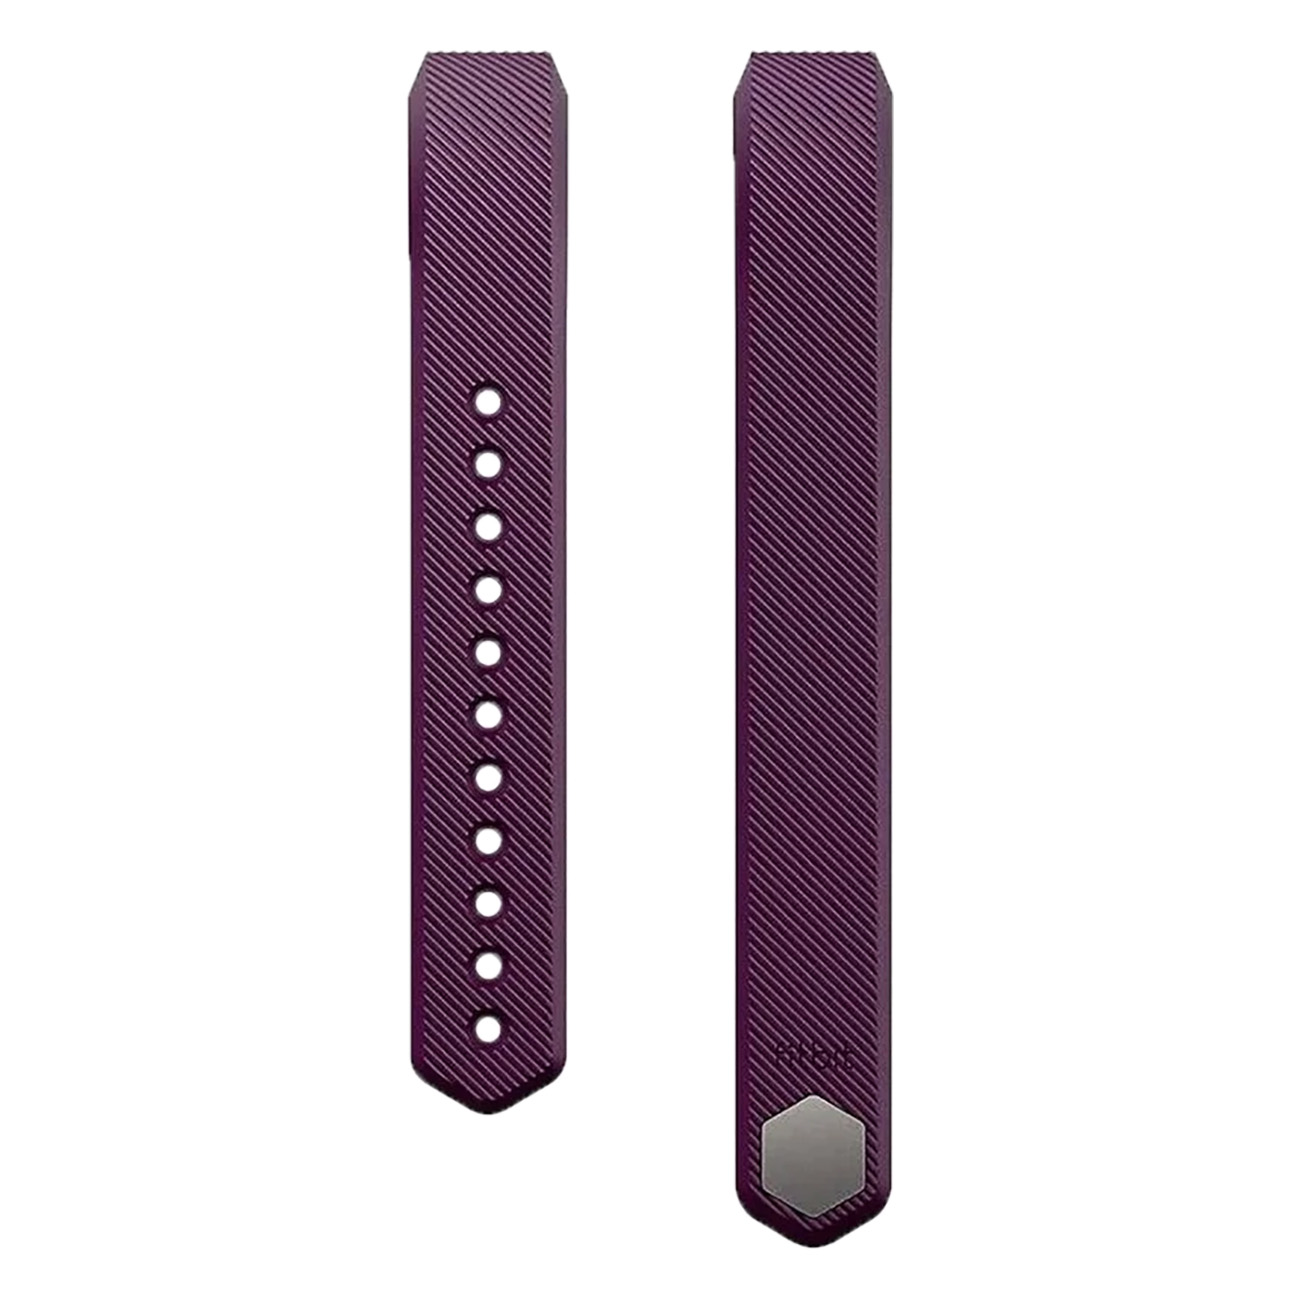 FitBit Classic Armband Gr. S für ALTA violett